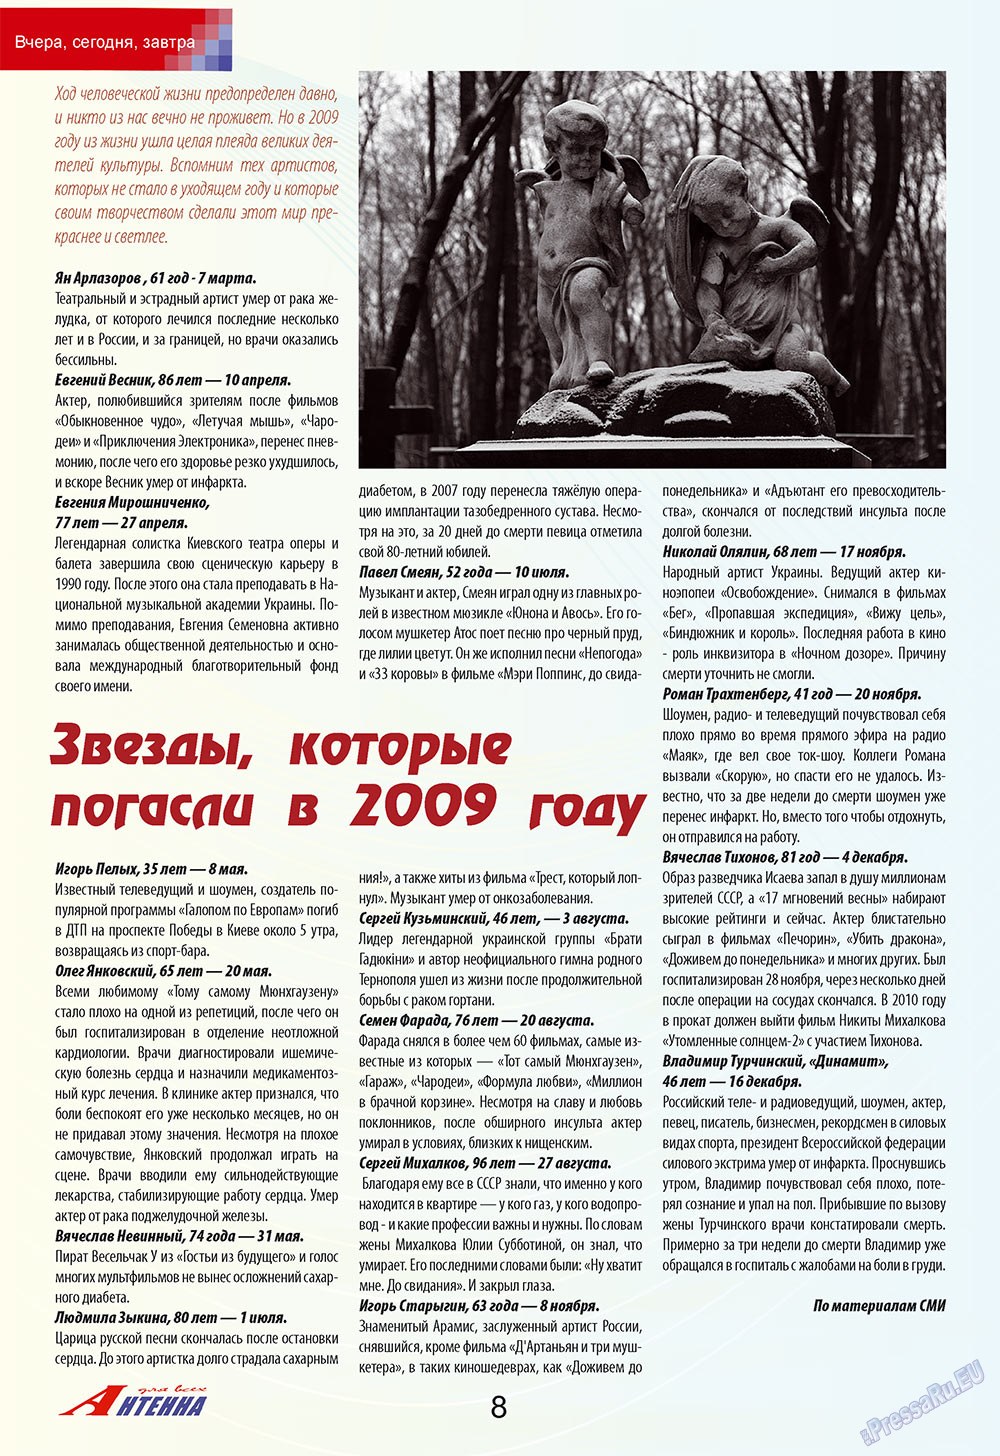 Антенна (журнал). 2010 год, номер 1, стр. 8